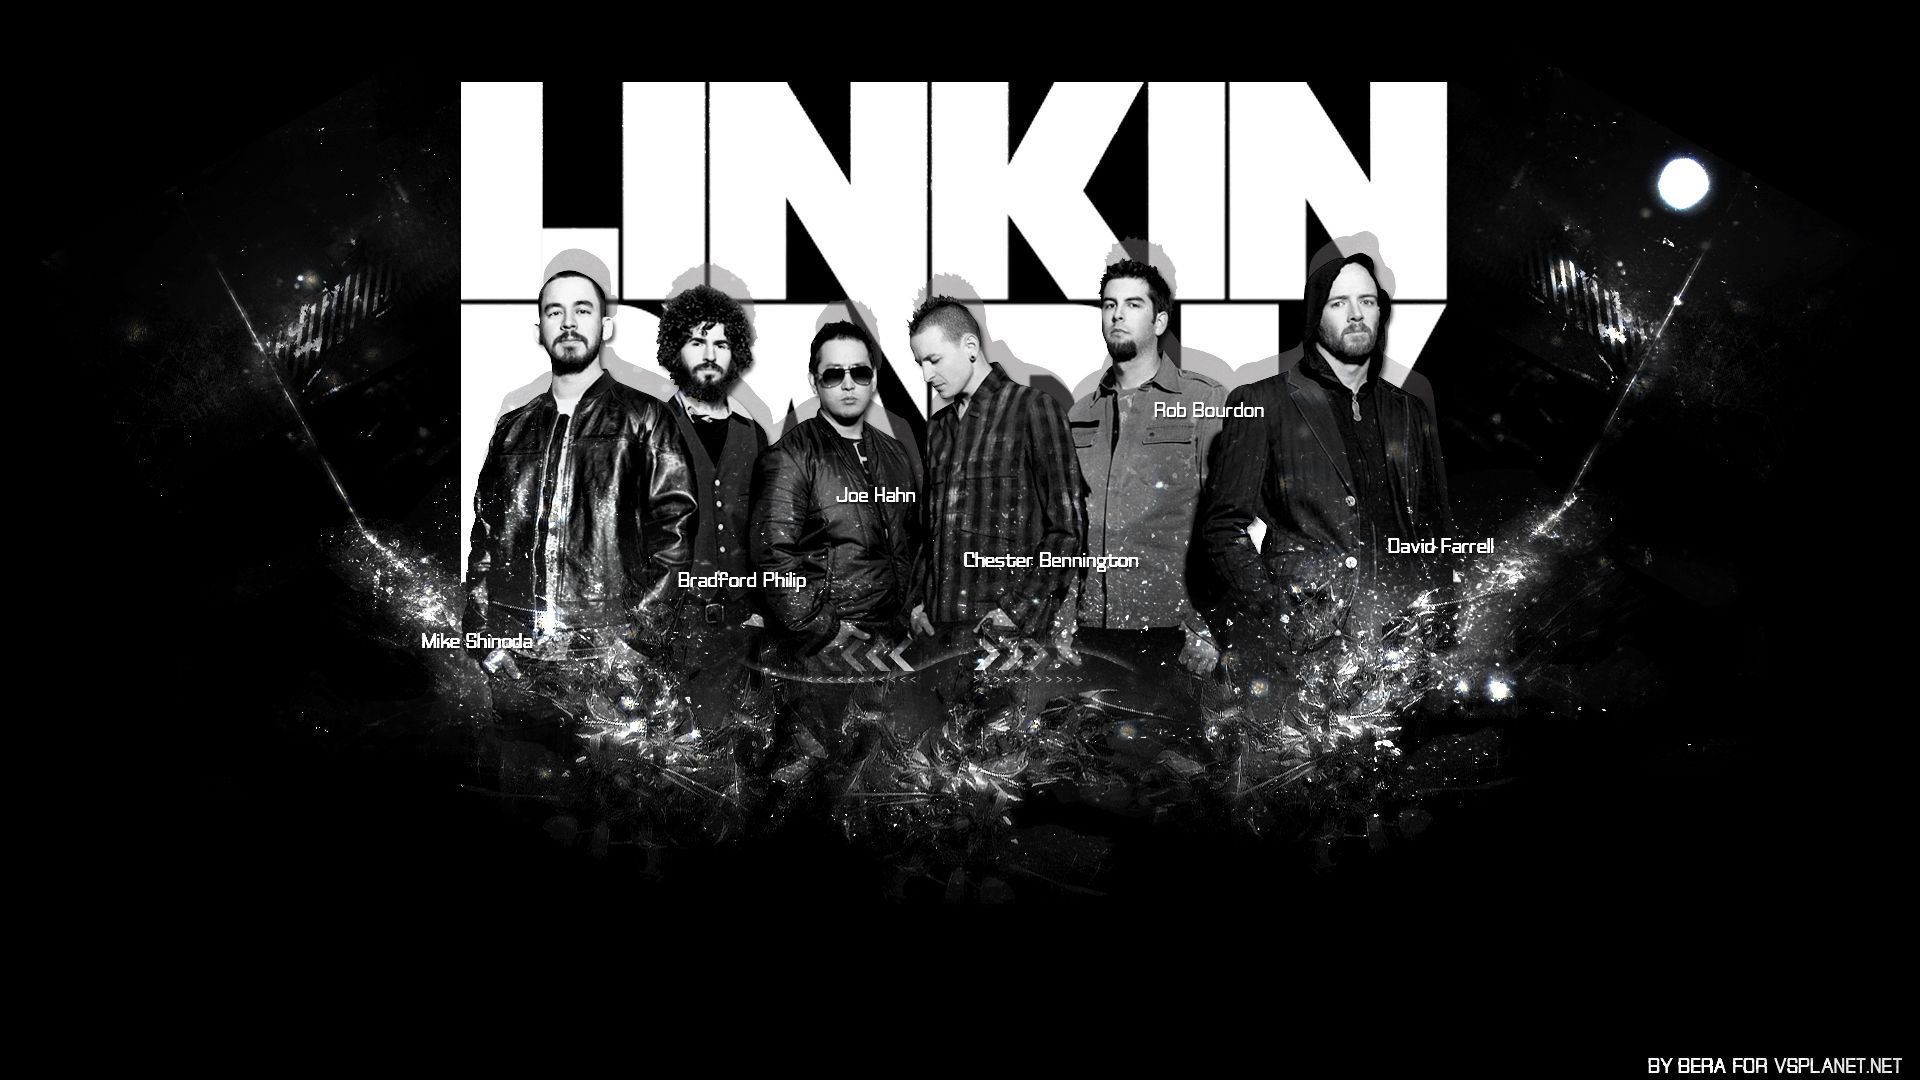 Linkin Park Wallpaper Full HD For PC Free Down 49089 Full HD